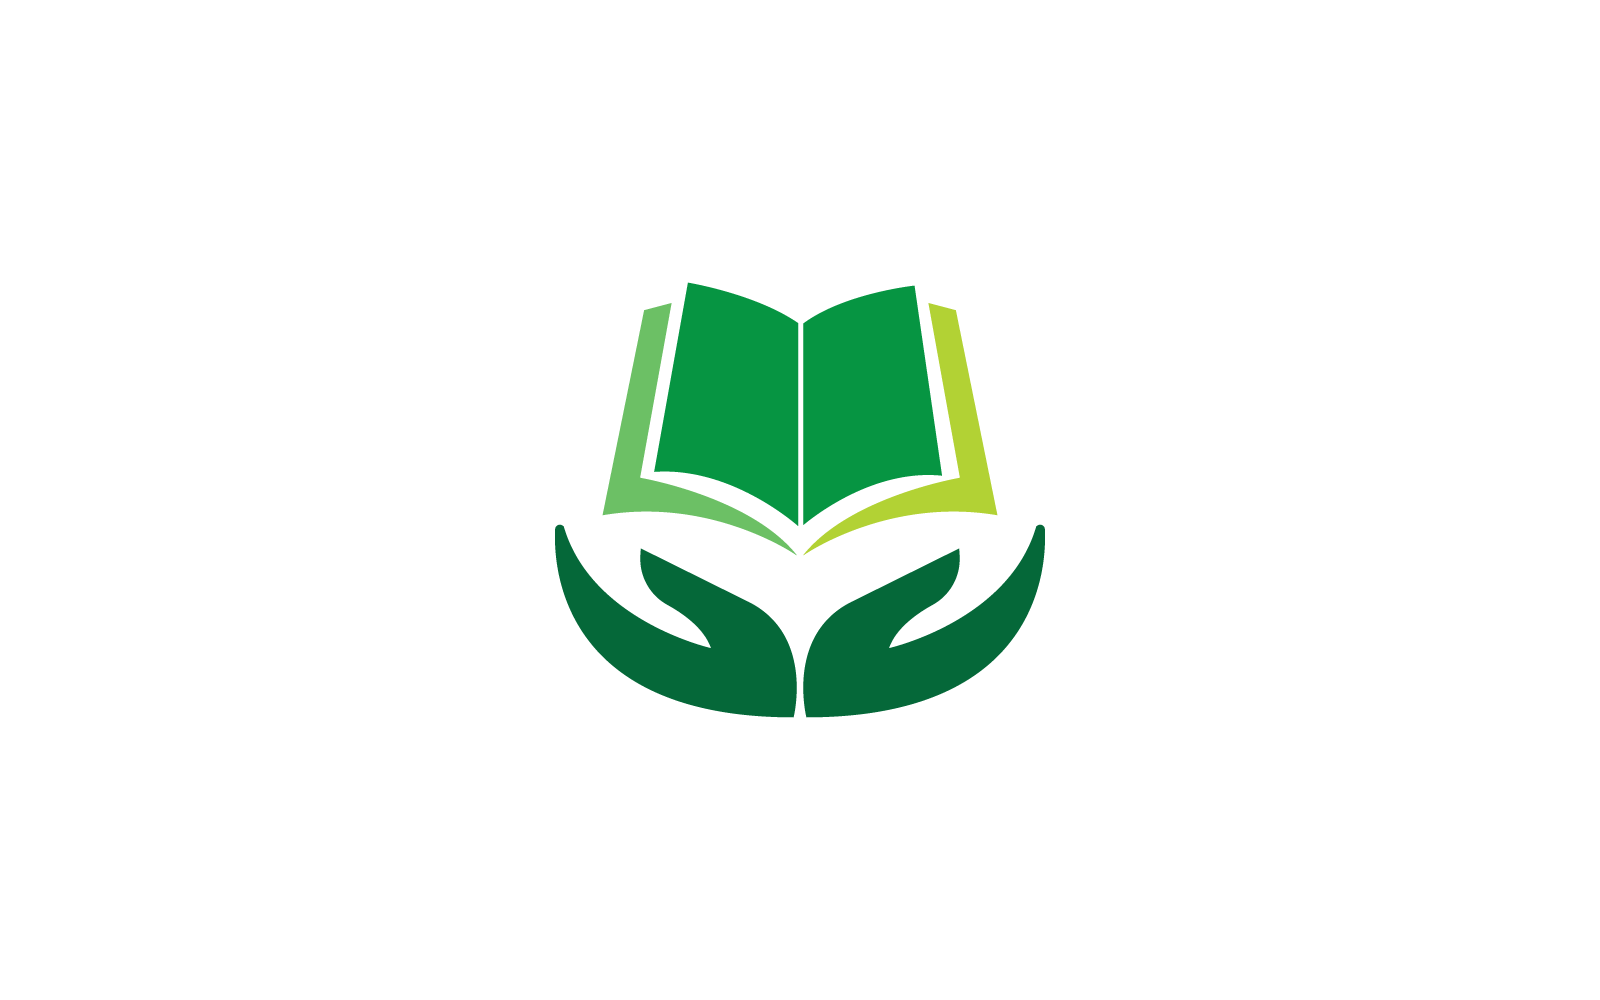 Book education design icon vector template